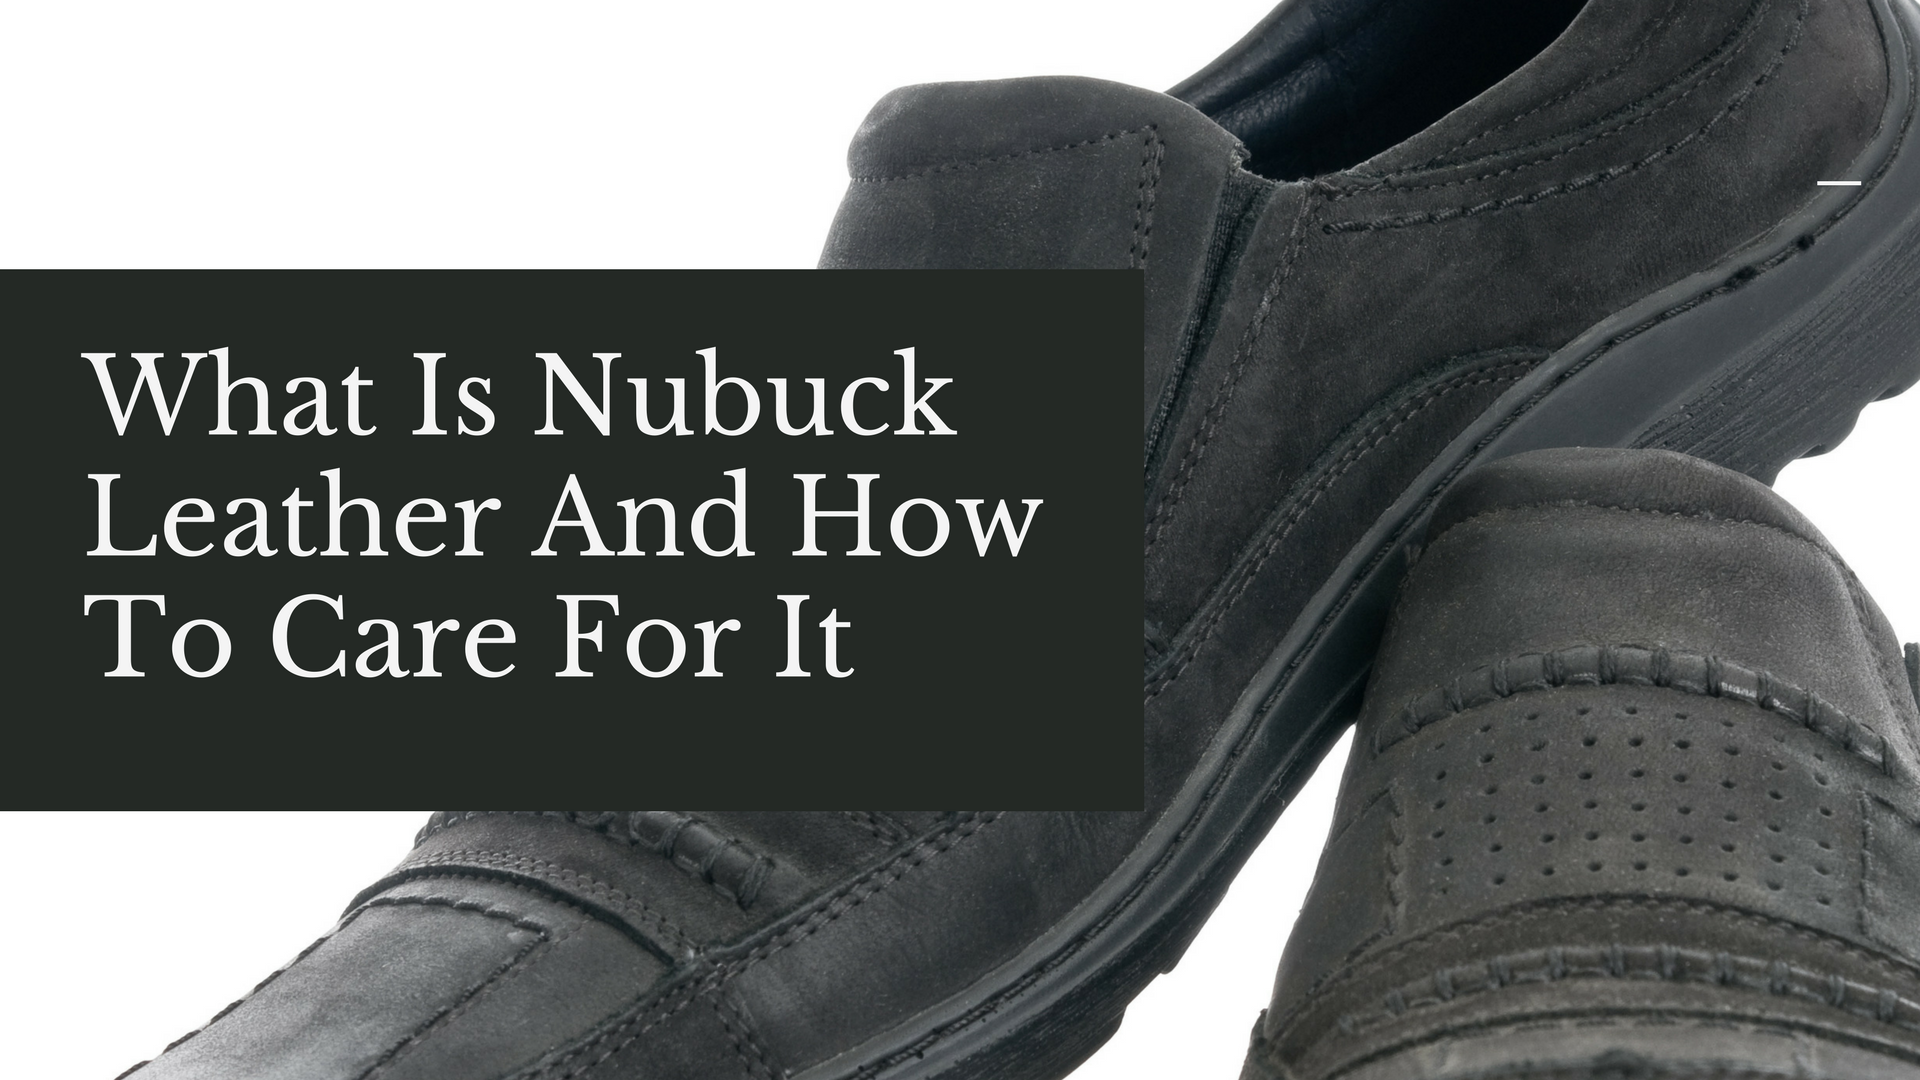 Nubuck leather shoes